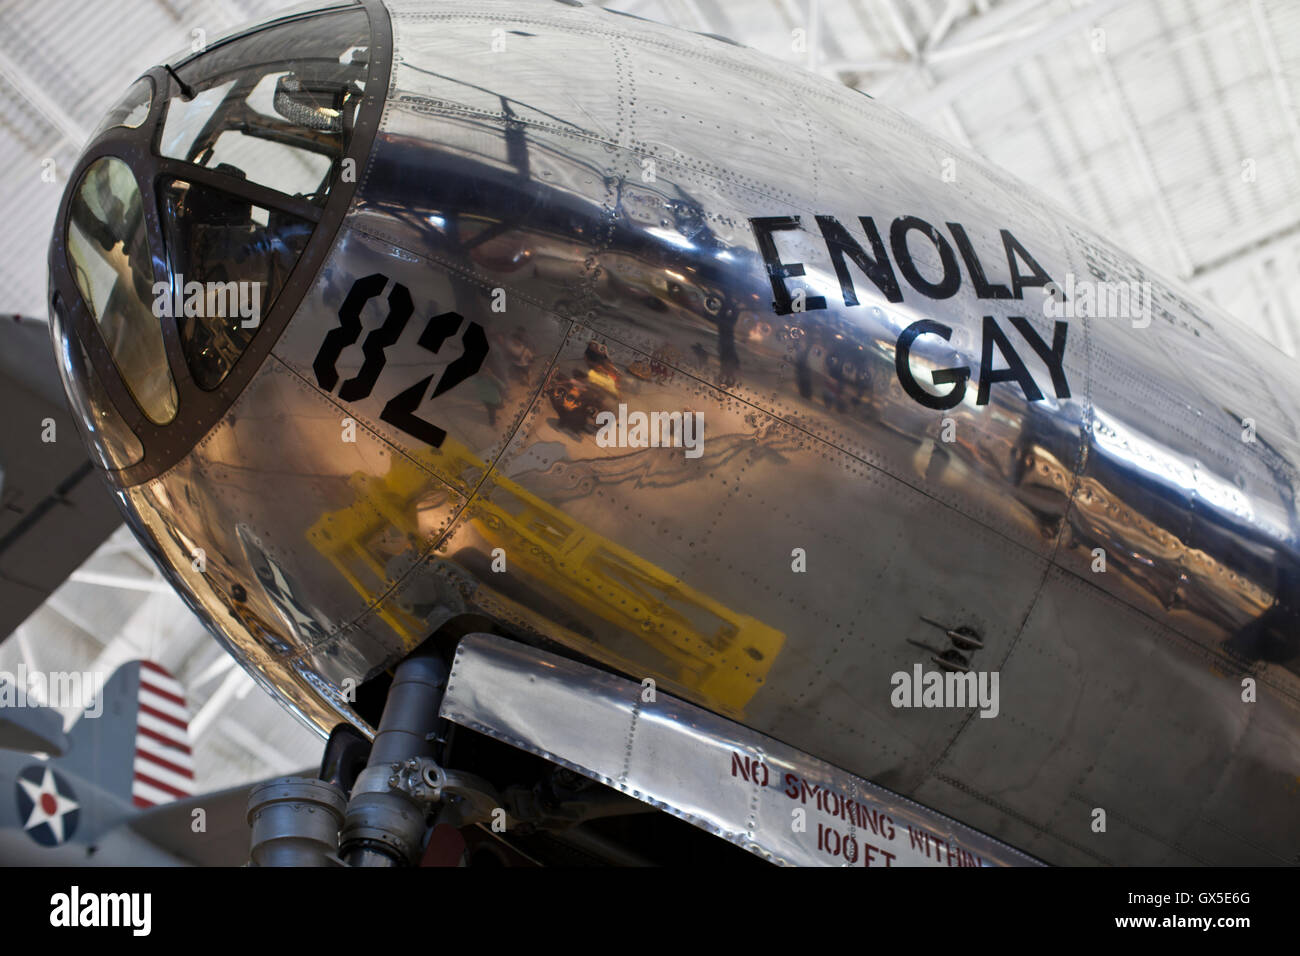 Superfortress Enola Gay, B29, an Udvar-Hazy Stockfotografie - Alamy